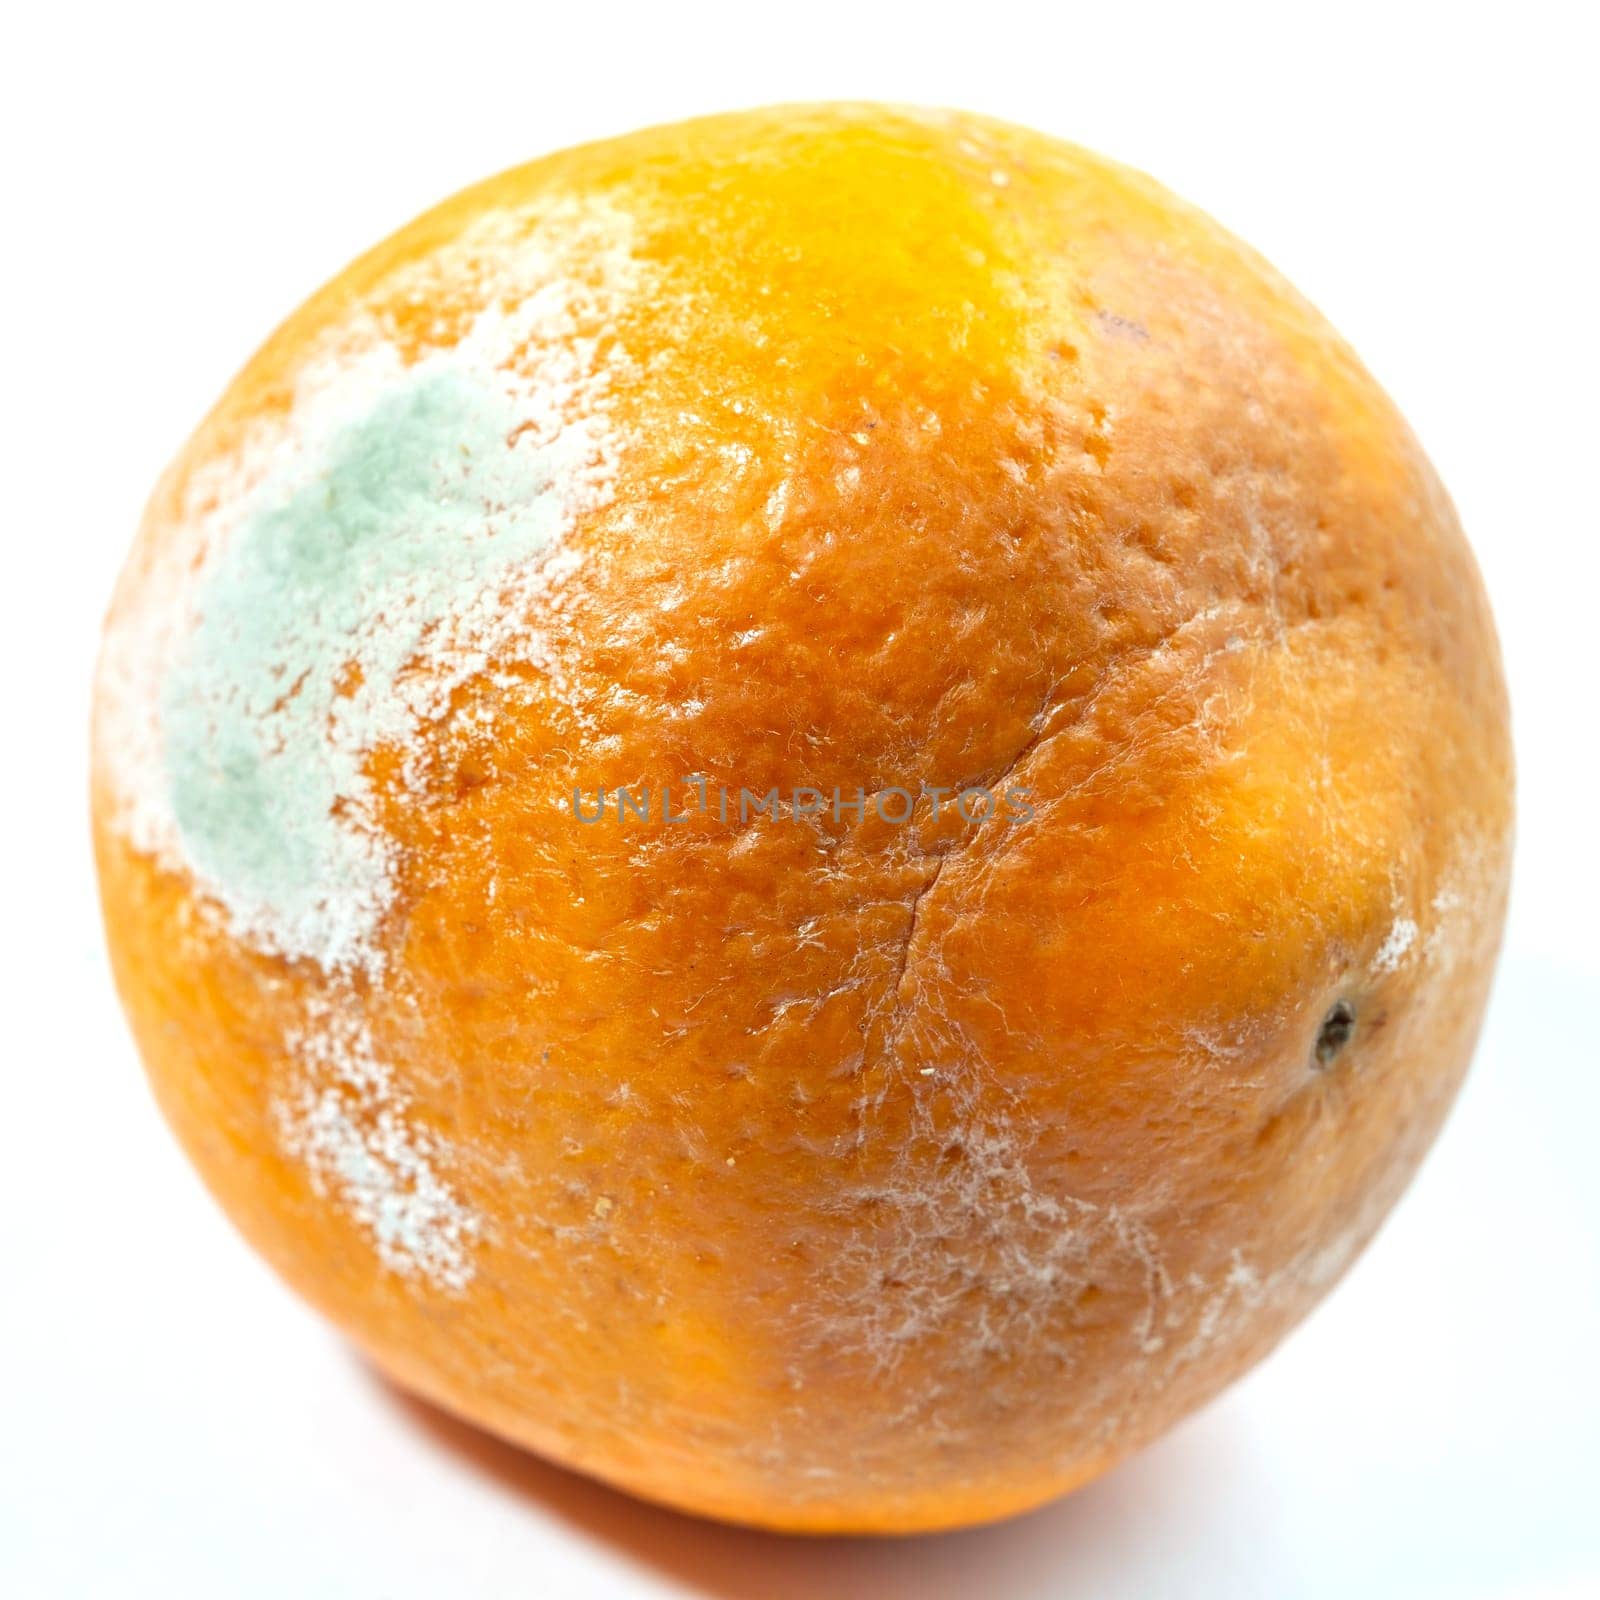 A moldy orange on a white background.